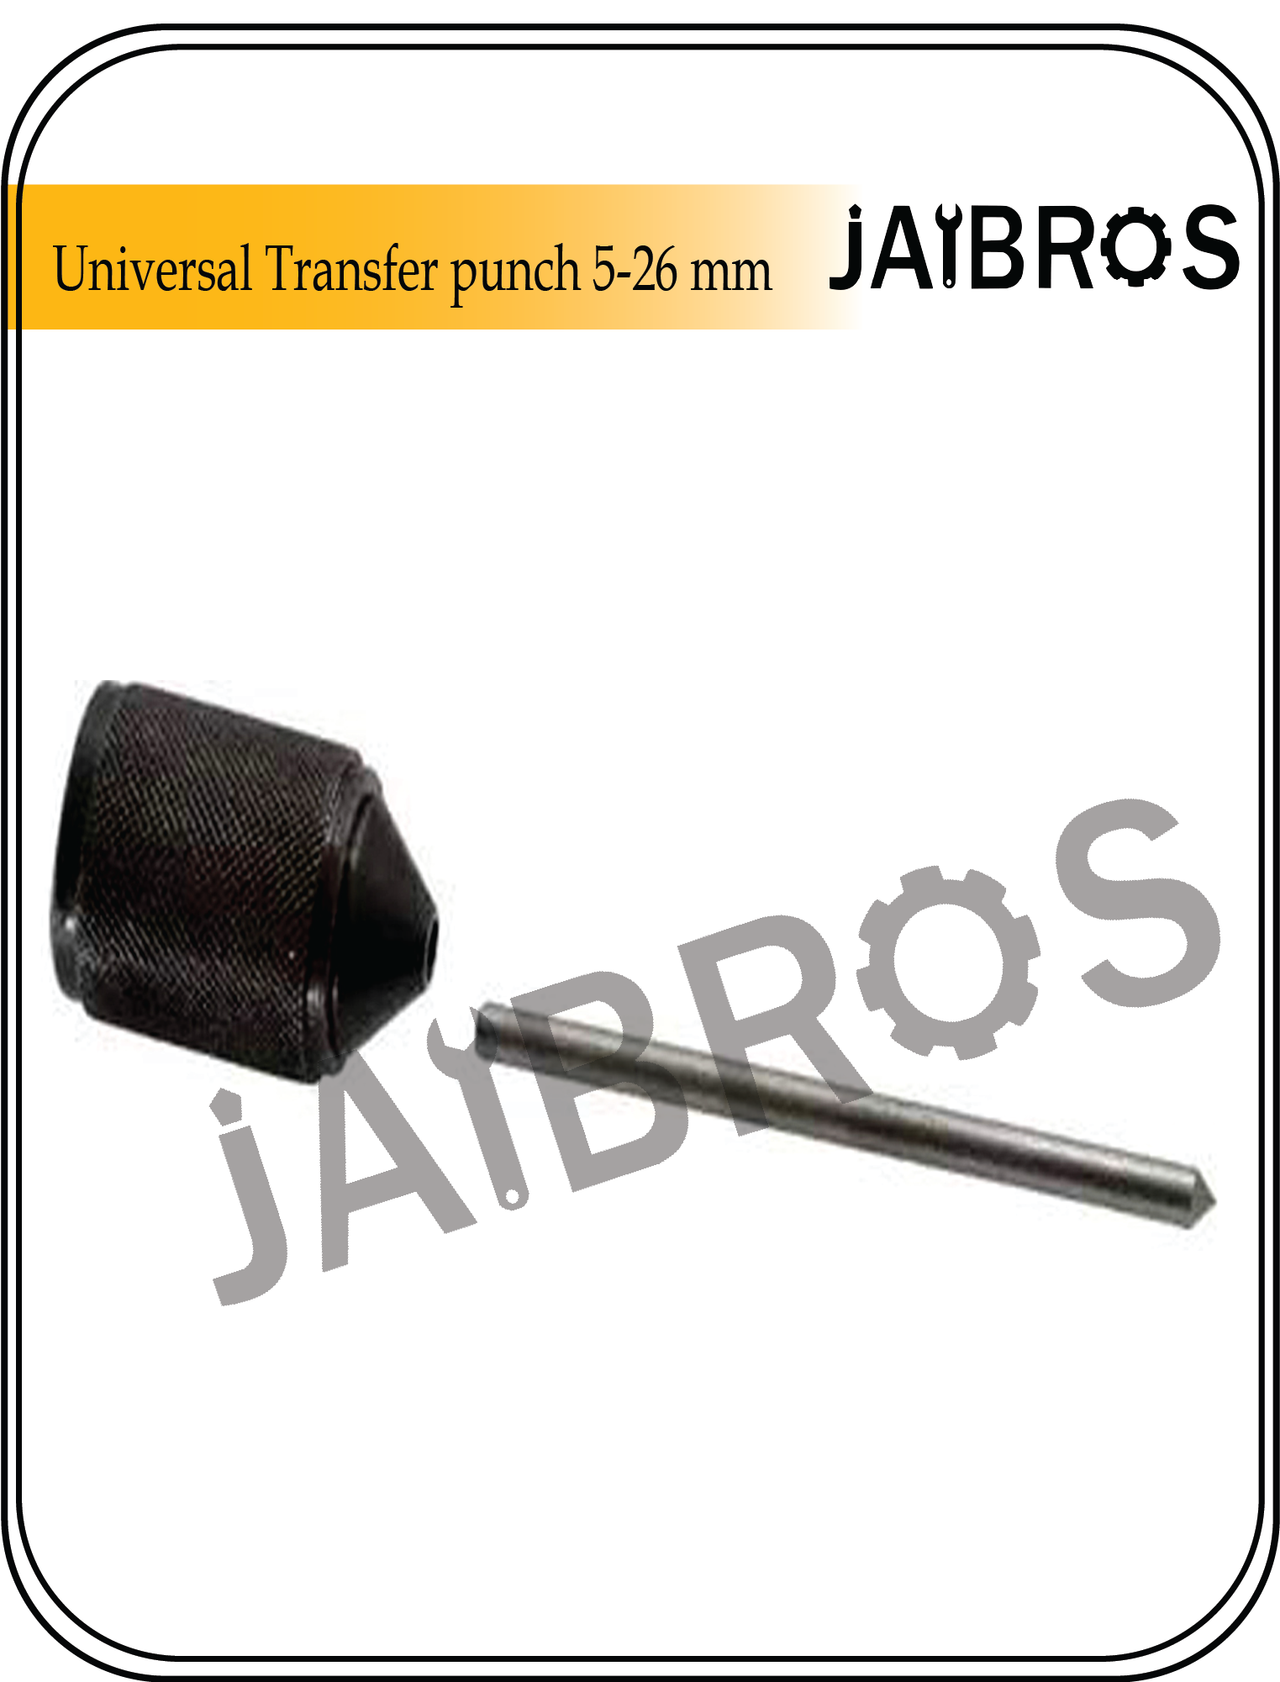 Universal Transfer punch 5-26 mm range